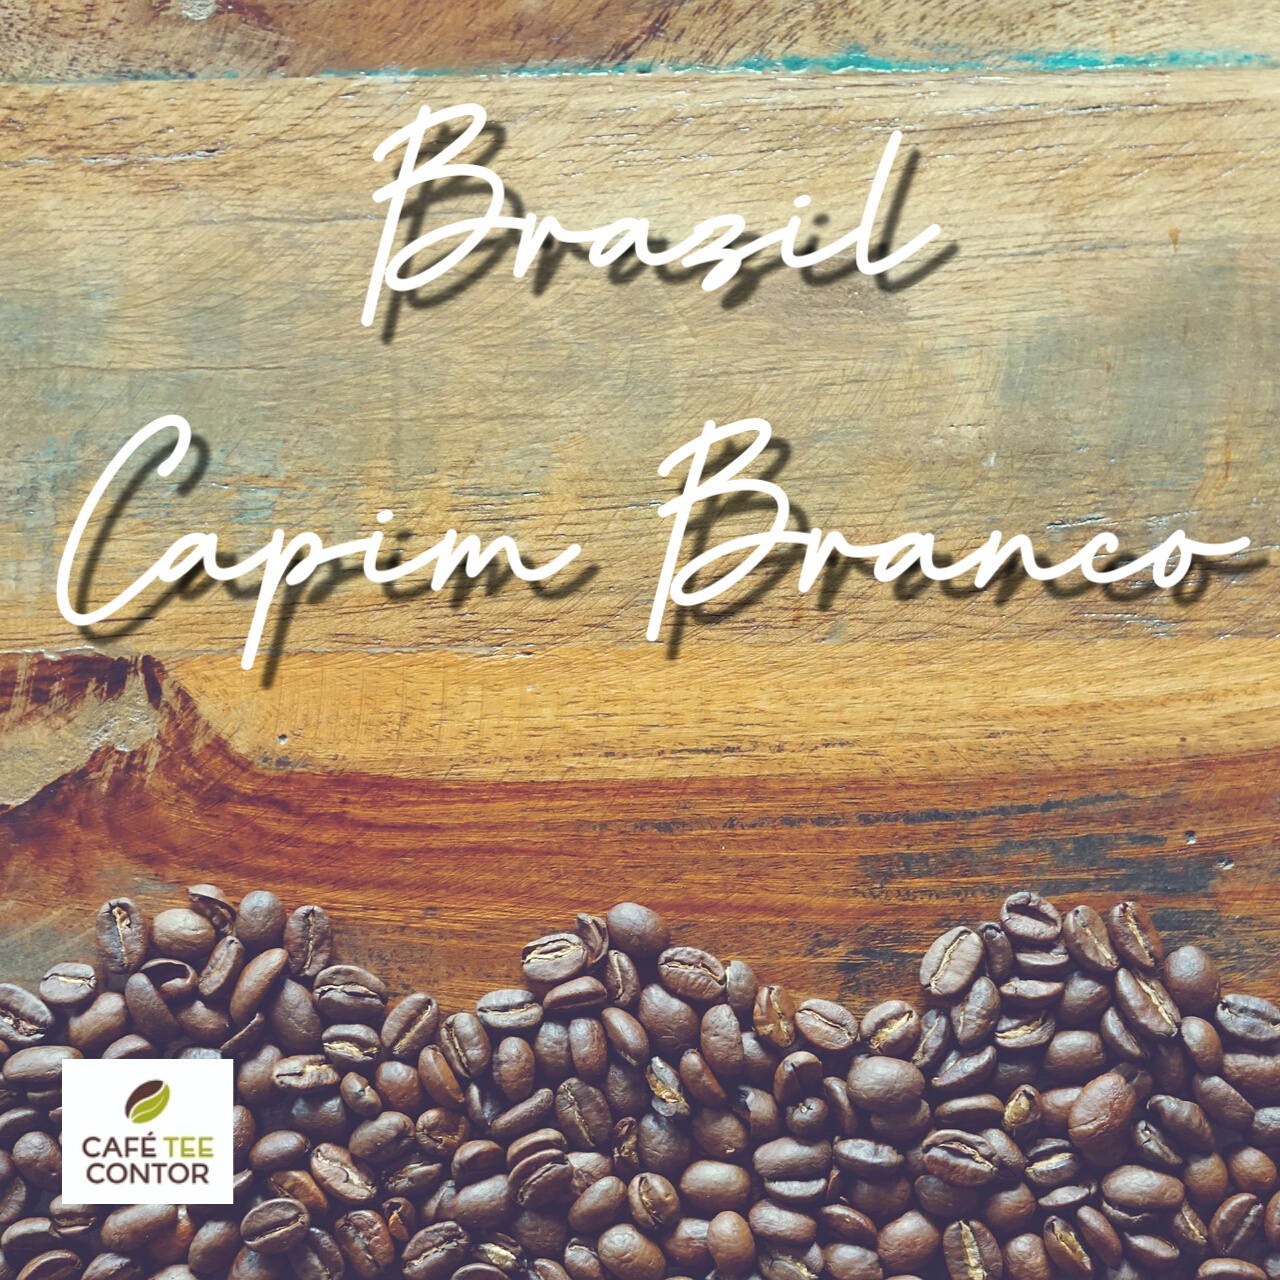 Kaffee Brazil Capim Branco